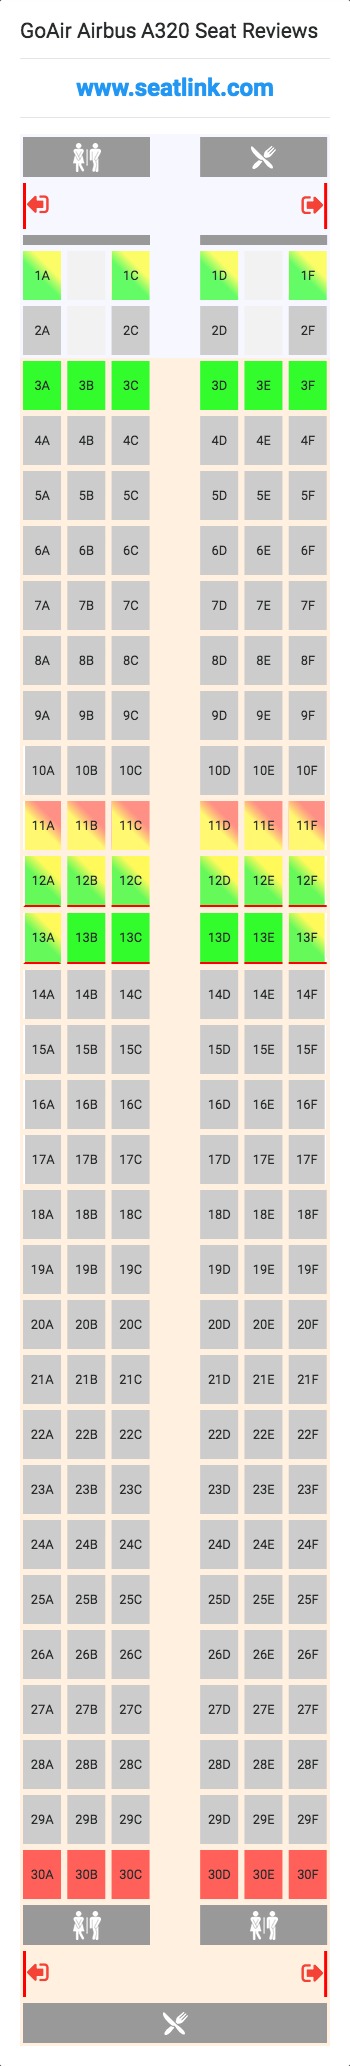 Icelandair Flight 622 Seating Chart